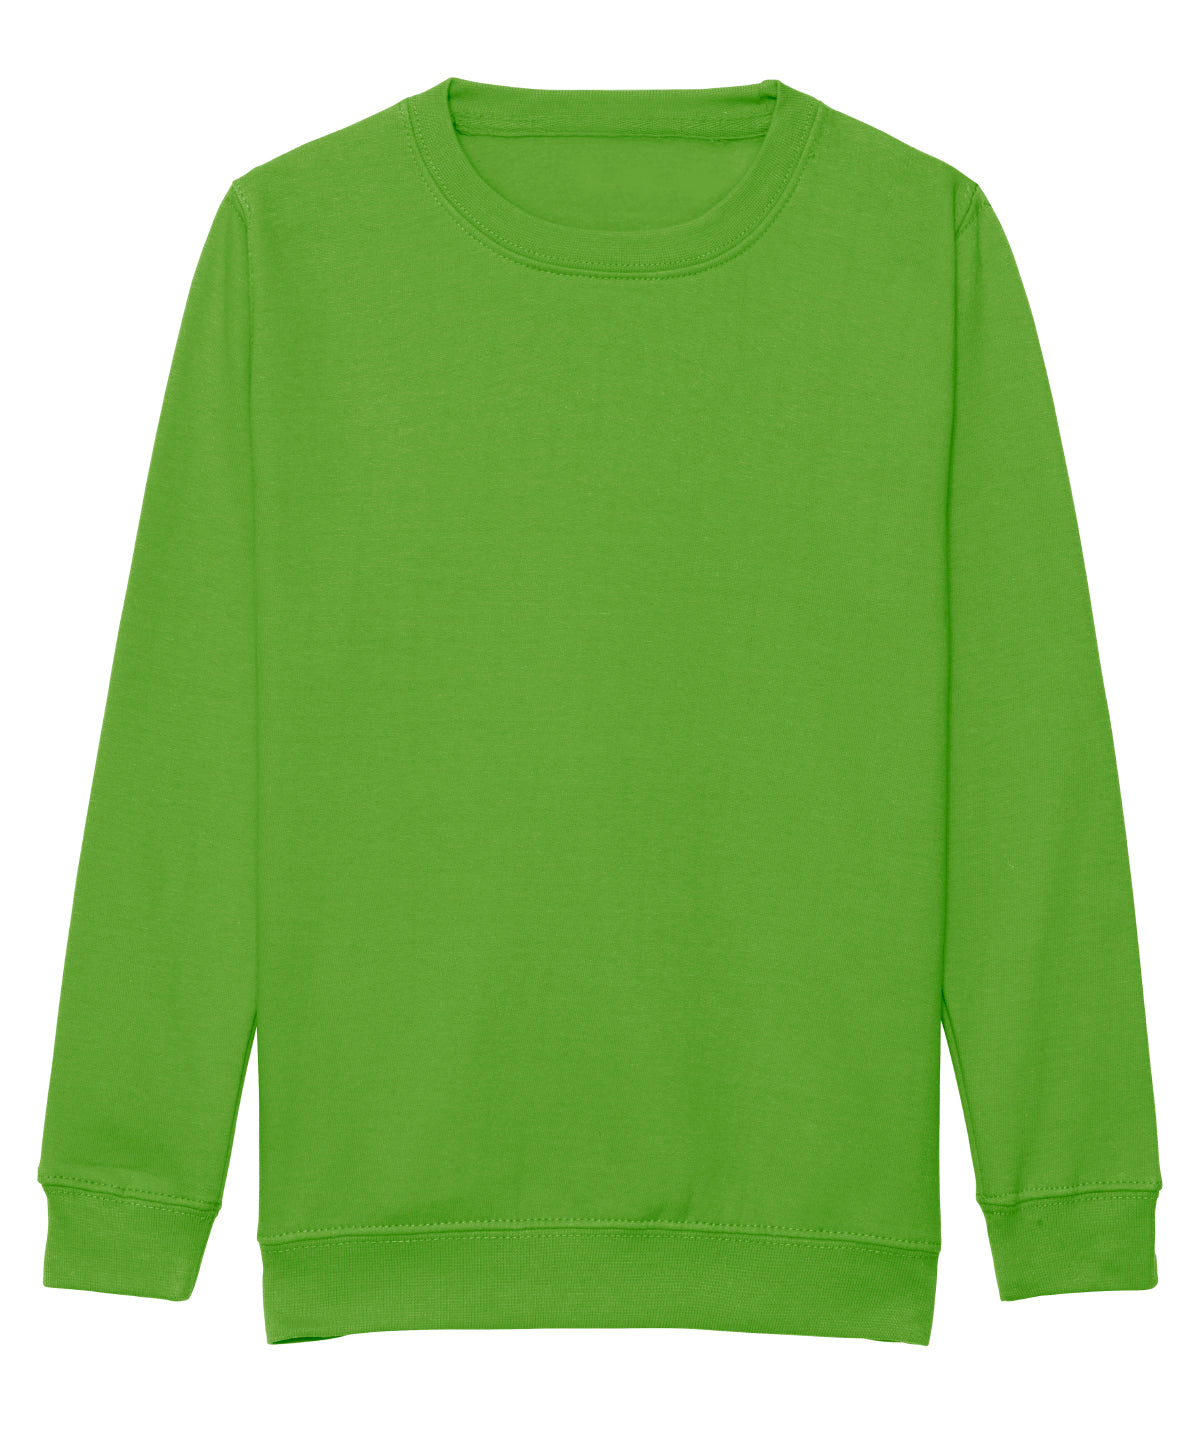 Personalised Sweatshirts - Navy AWDis Just Hoods Kids AWDis sweatshirt